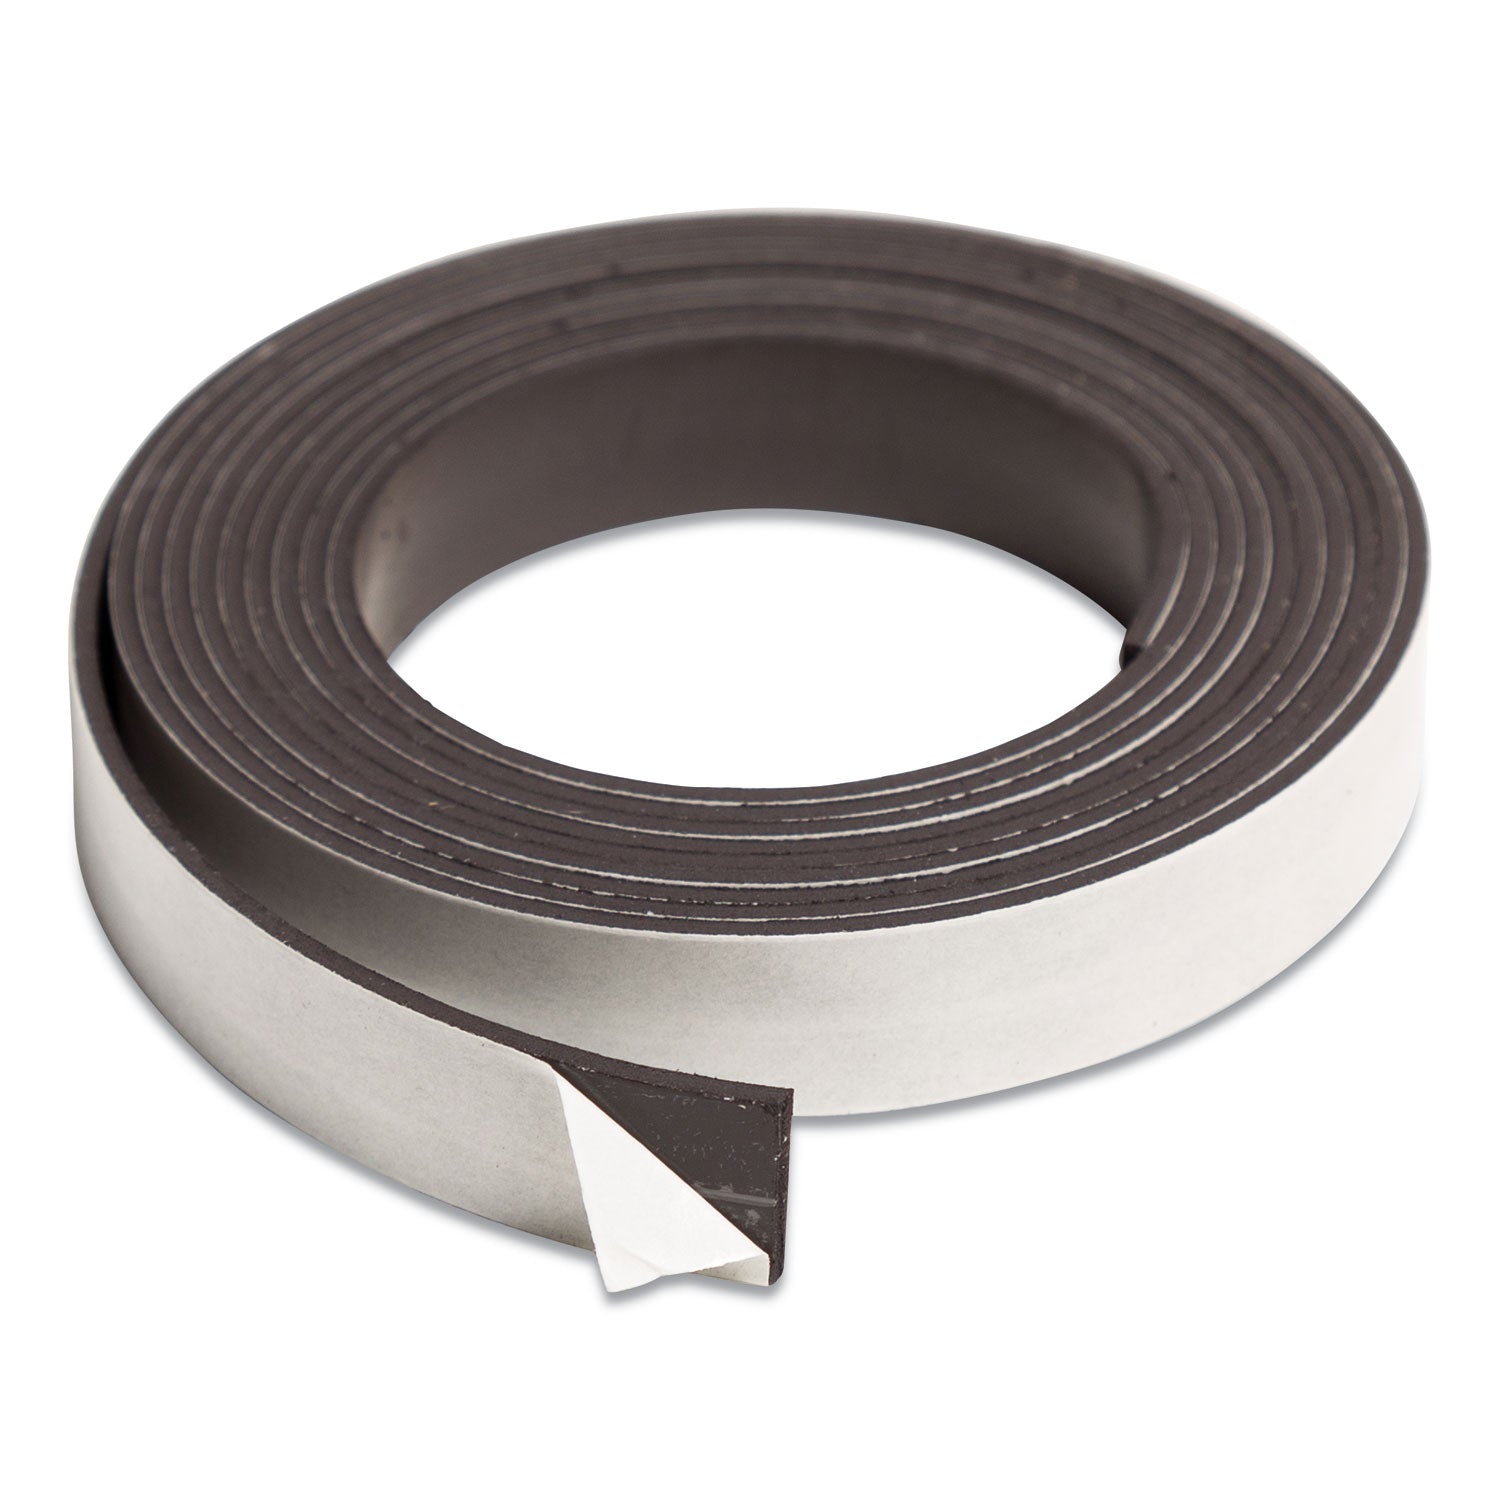 magnetic-adhesive-tape-roll-05-x-7-ft-black_ubrfm2319 - 1